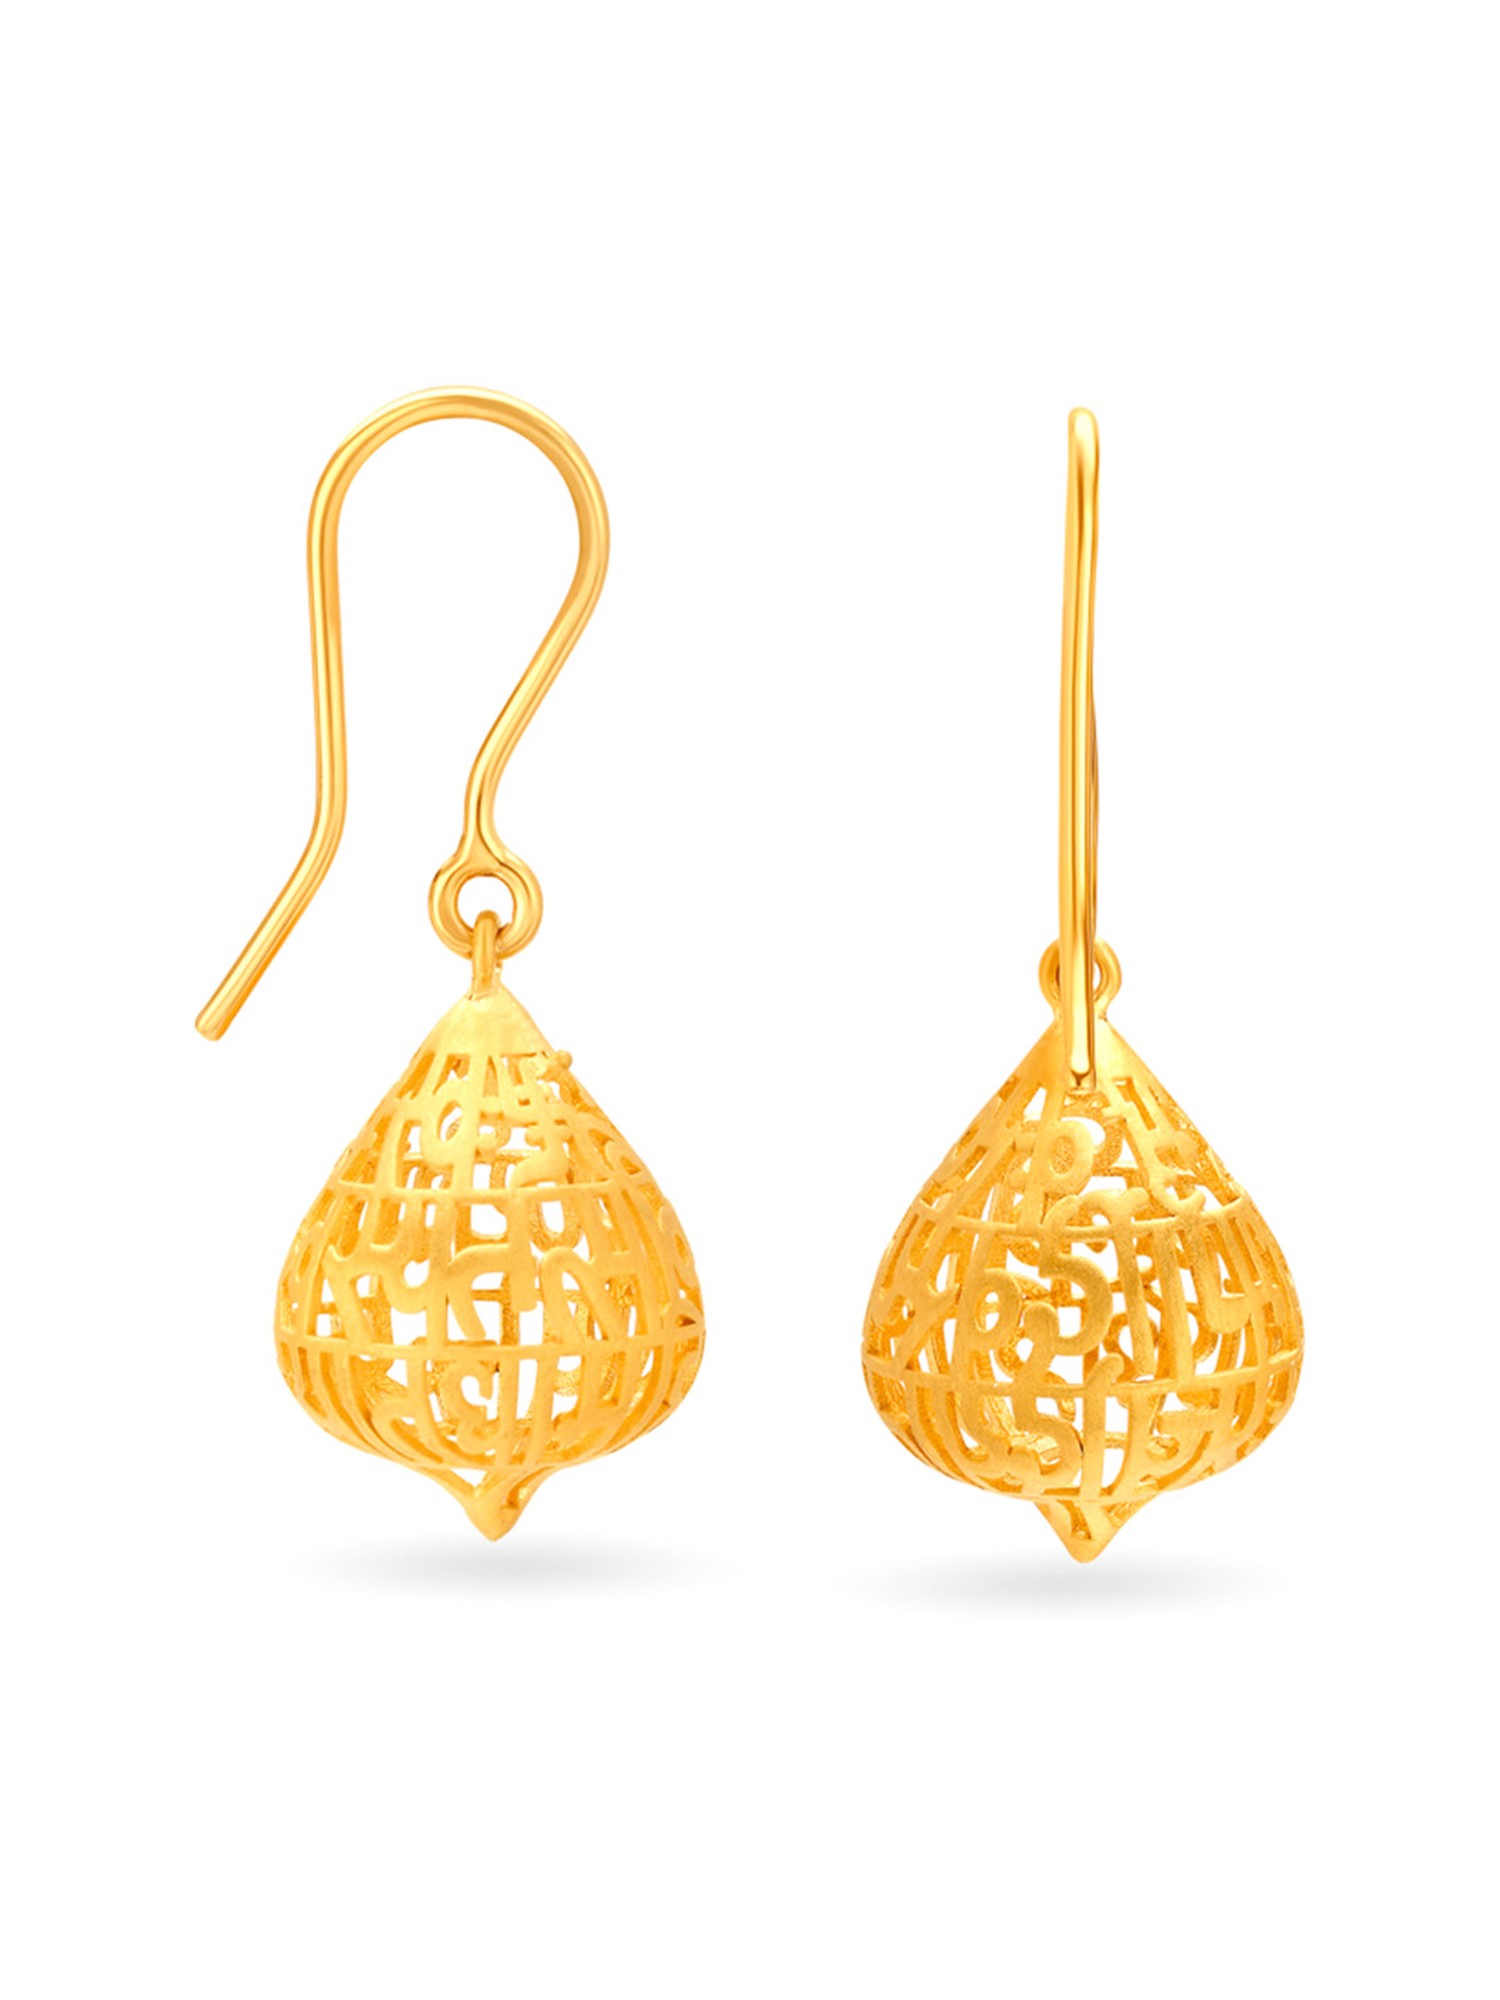 Latest Beautiful Gold Earrings by Tanishq Jewellery - YouTube